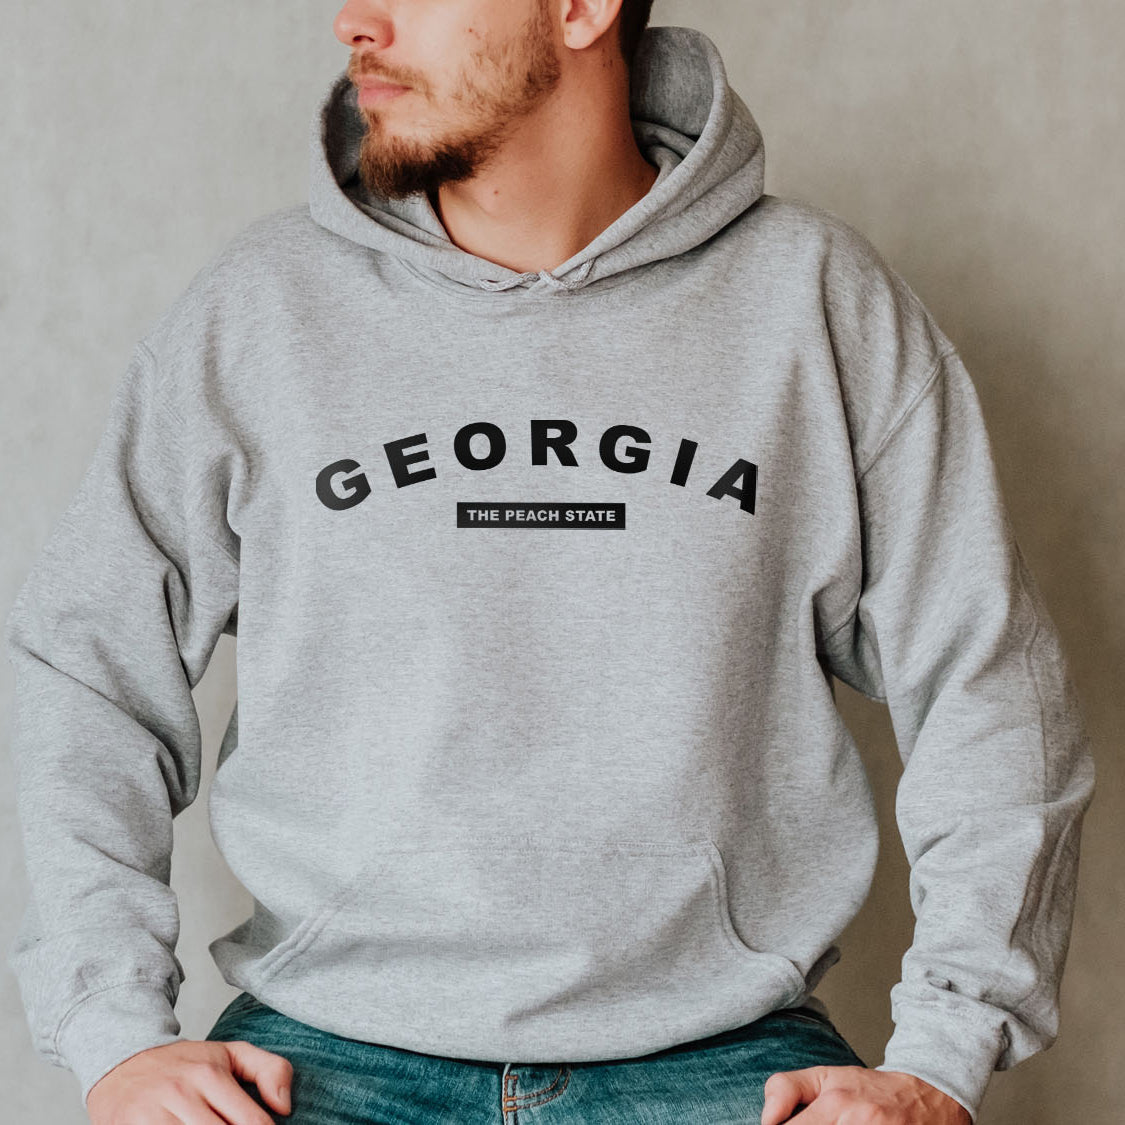 Georgia The Peach State Hoodie - United States Name & Slogan Minimal Design Printed Hoodie